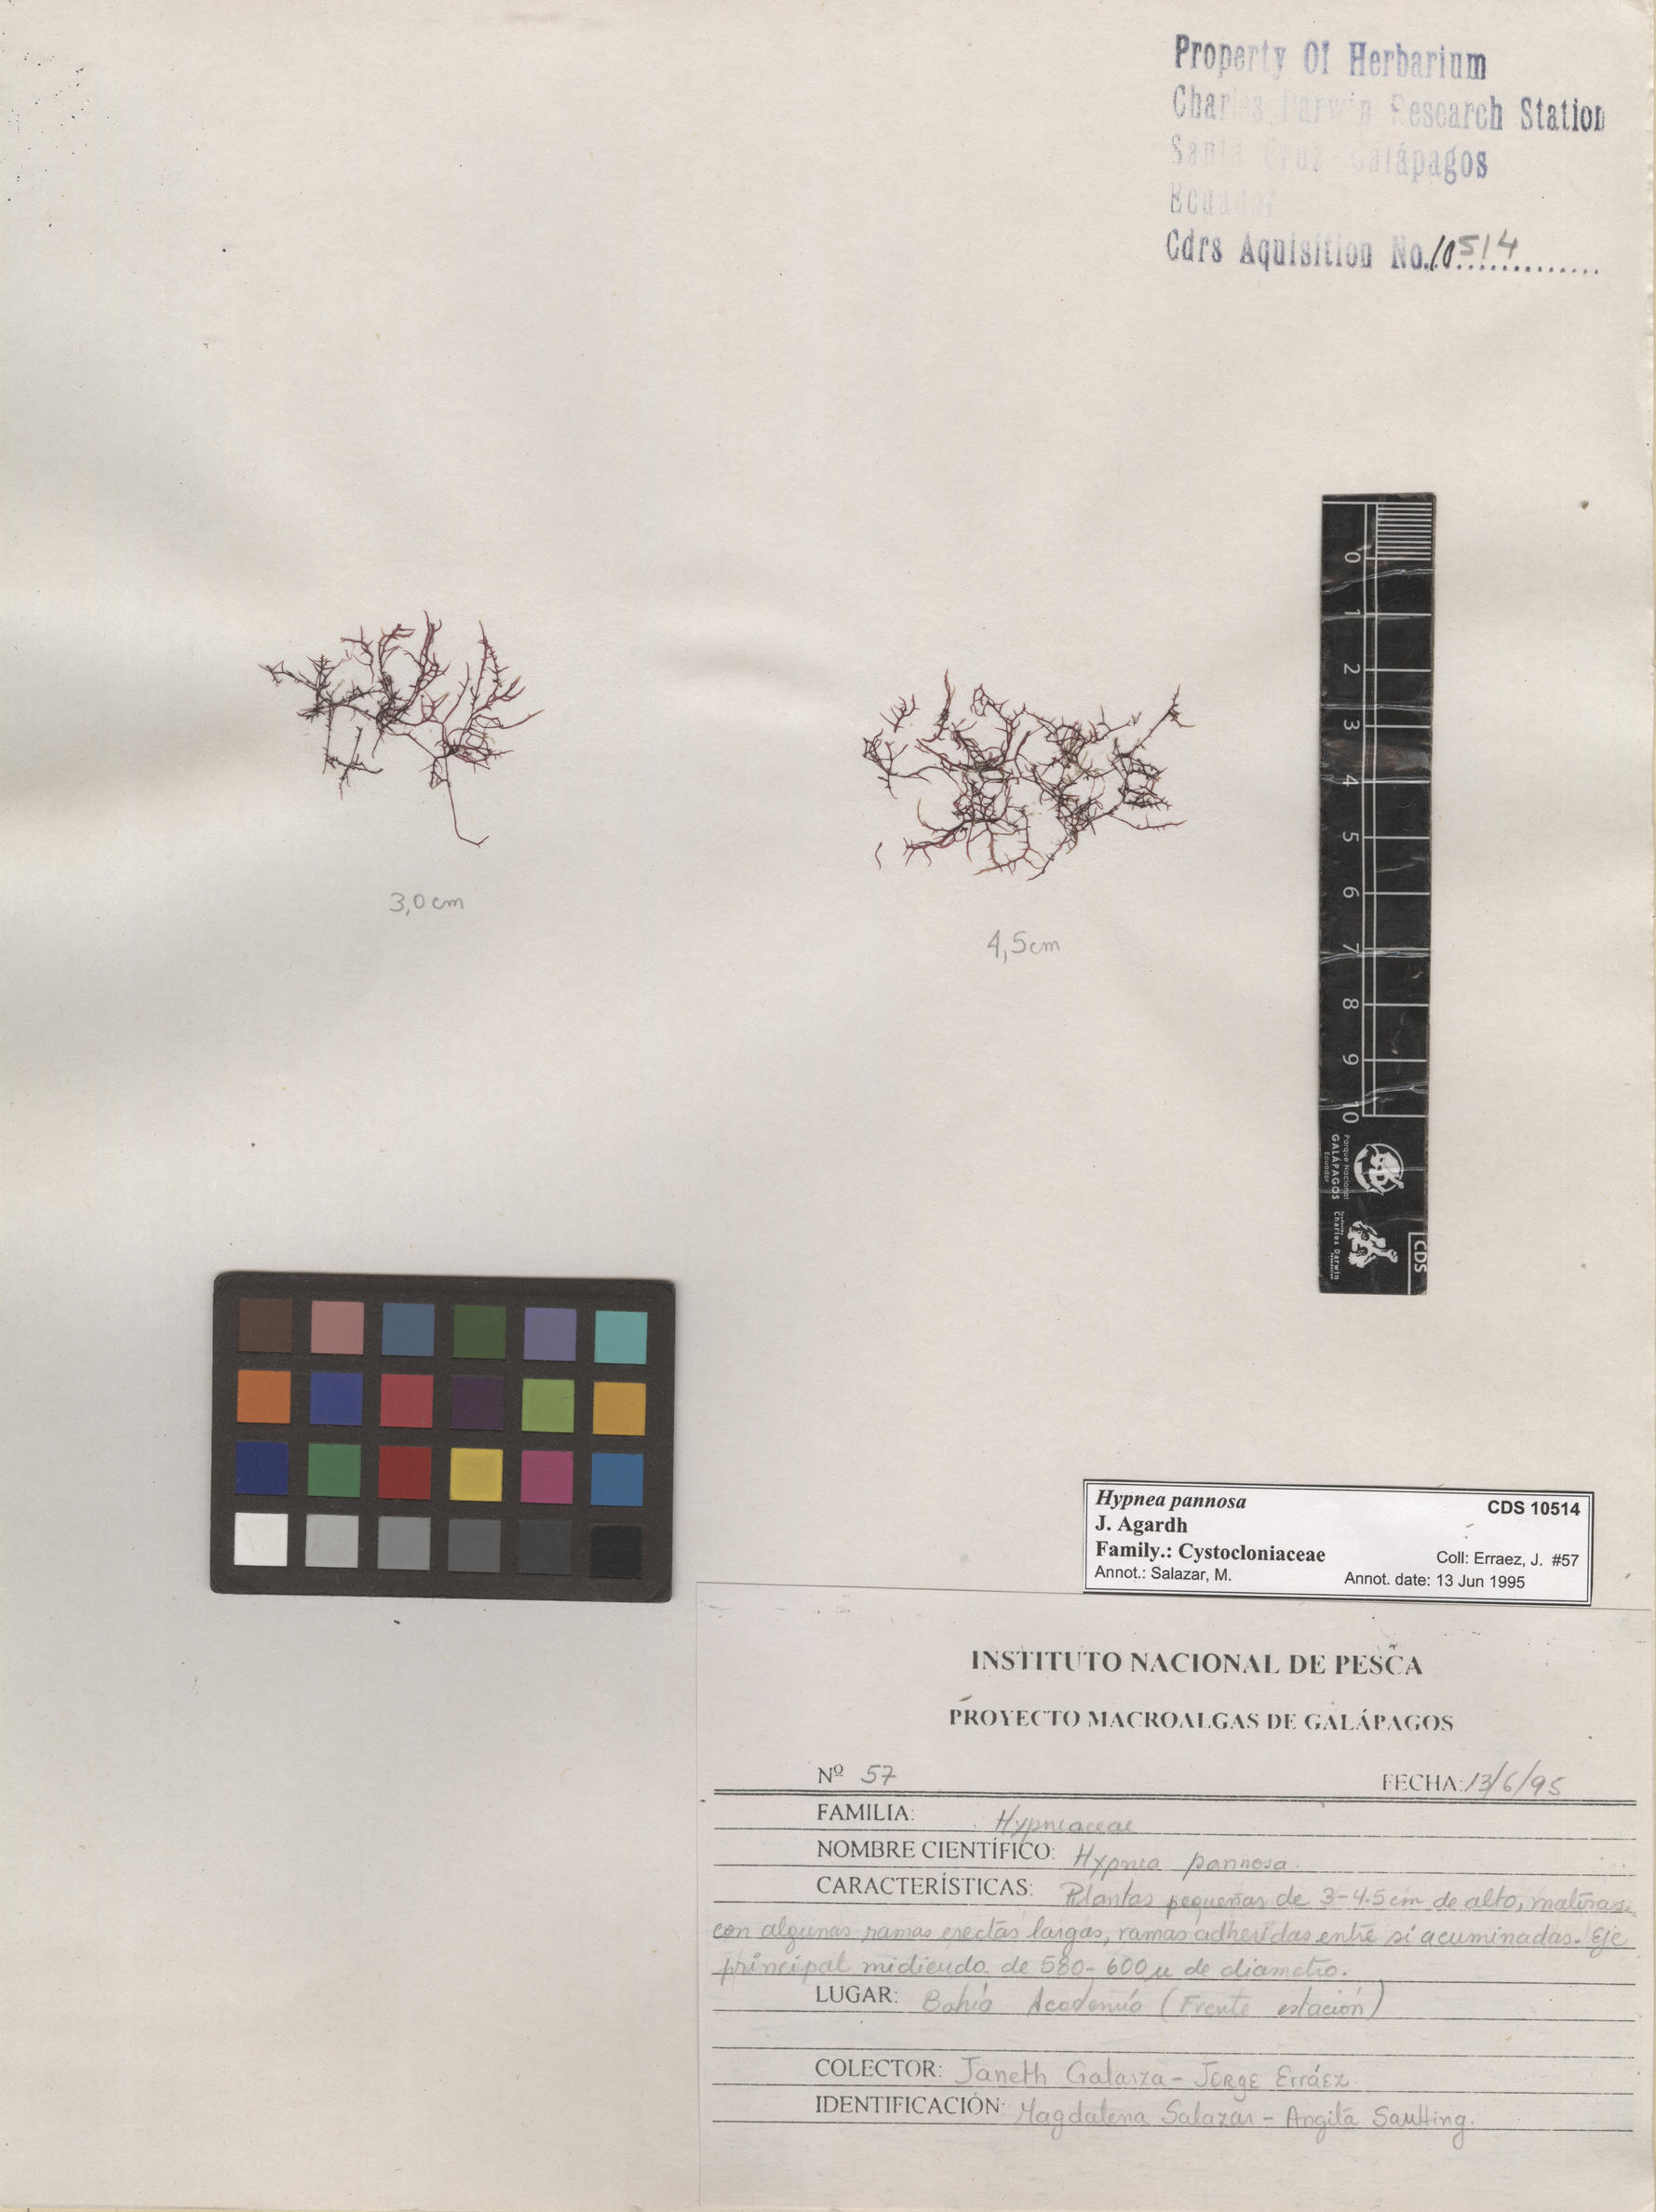  Hypnea pannosa , CDS specimen herbarium. Photo: Bravo, L..